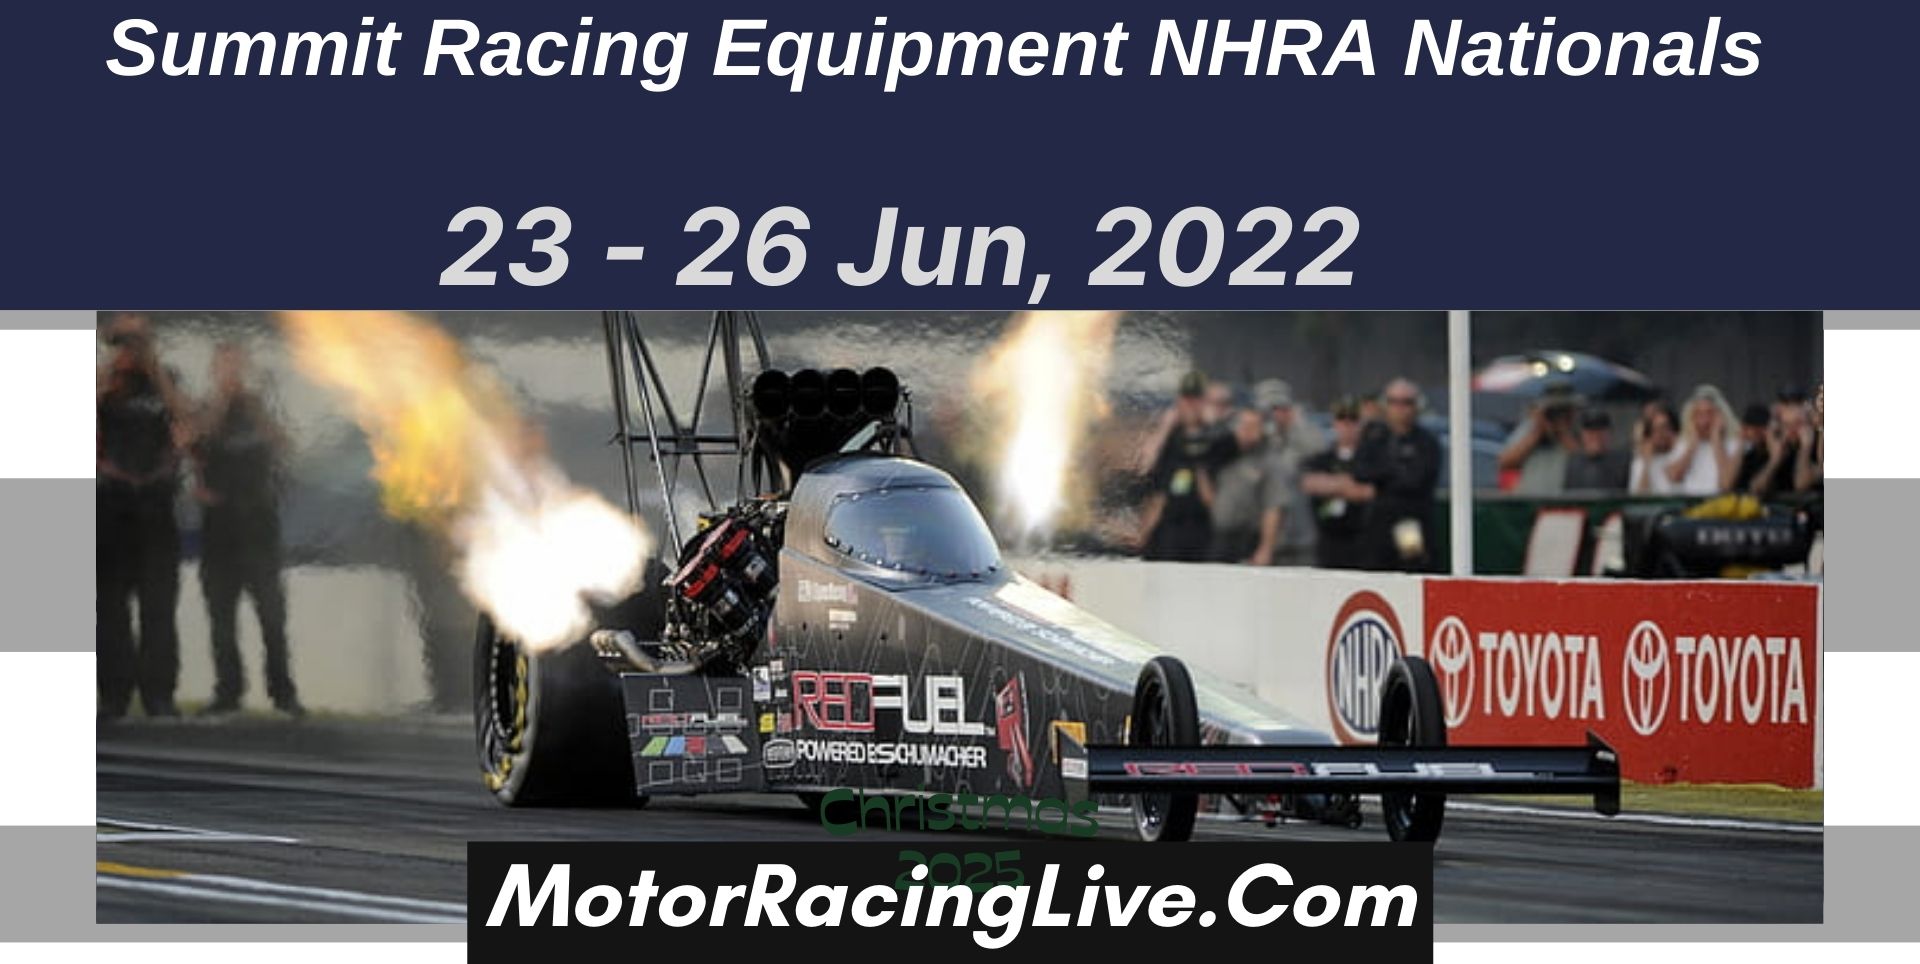 Summit Racing Equipment NHRA Nationals 2022 Live Stream